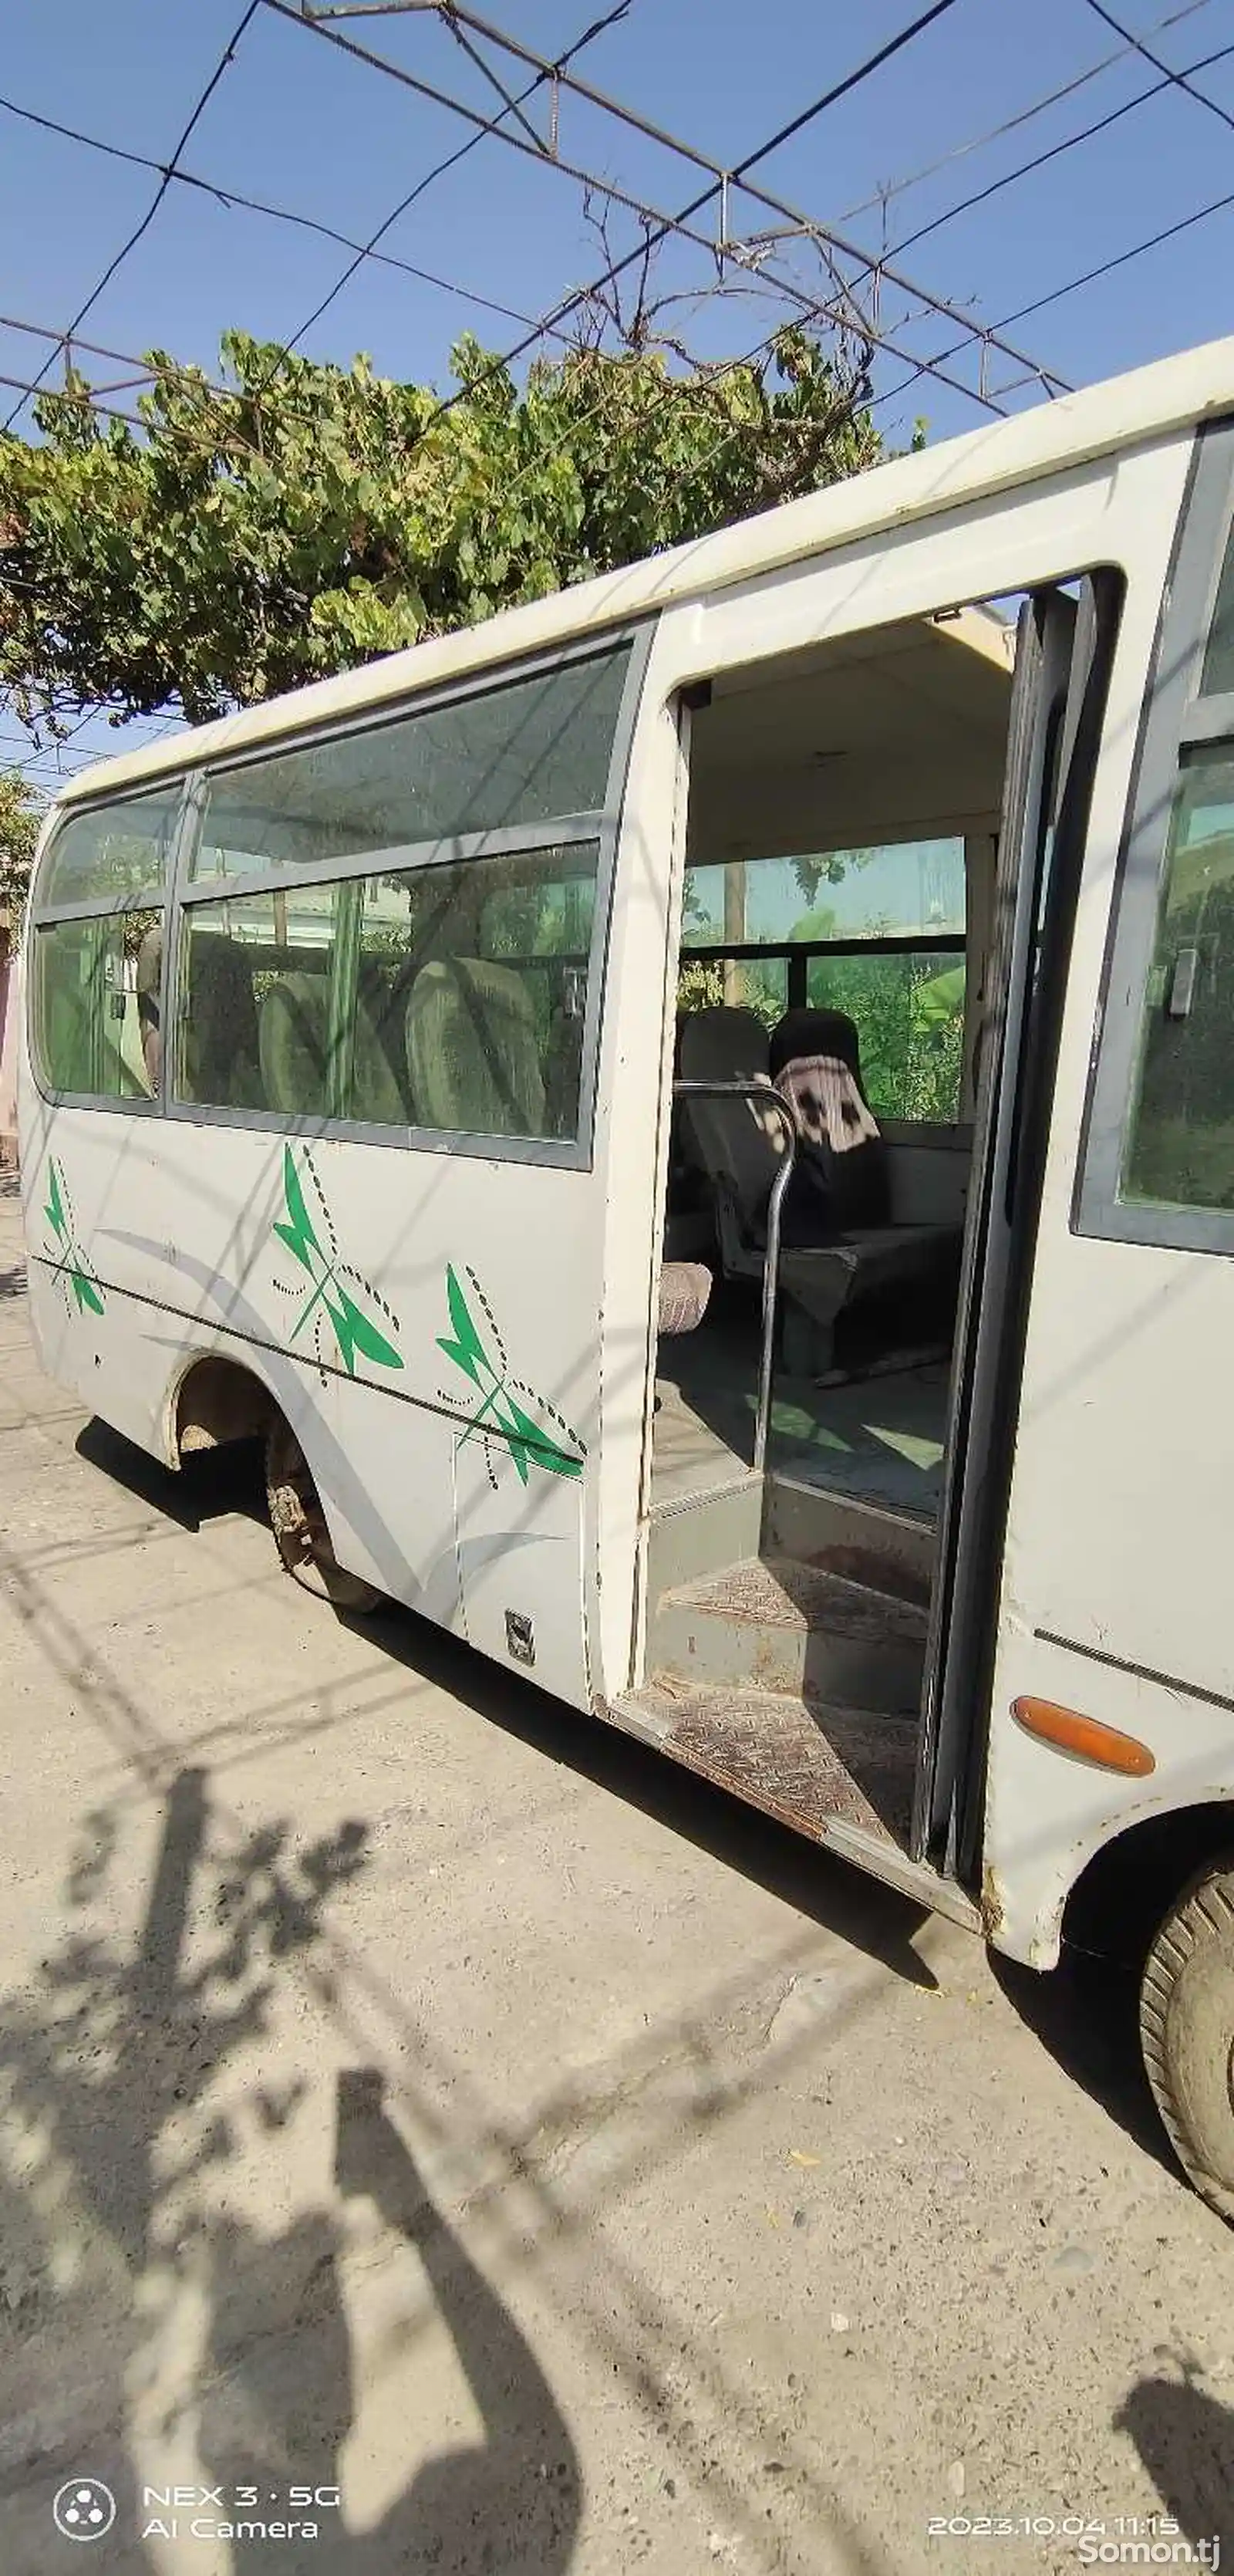 Автобус Shaolin, 2014-10